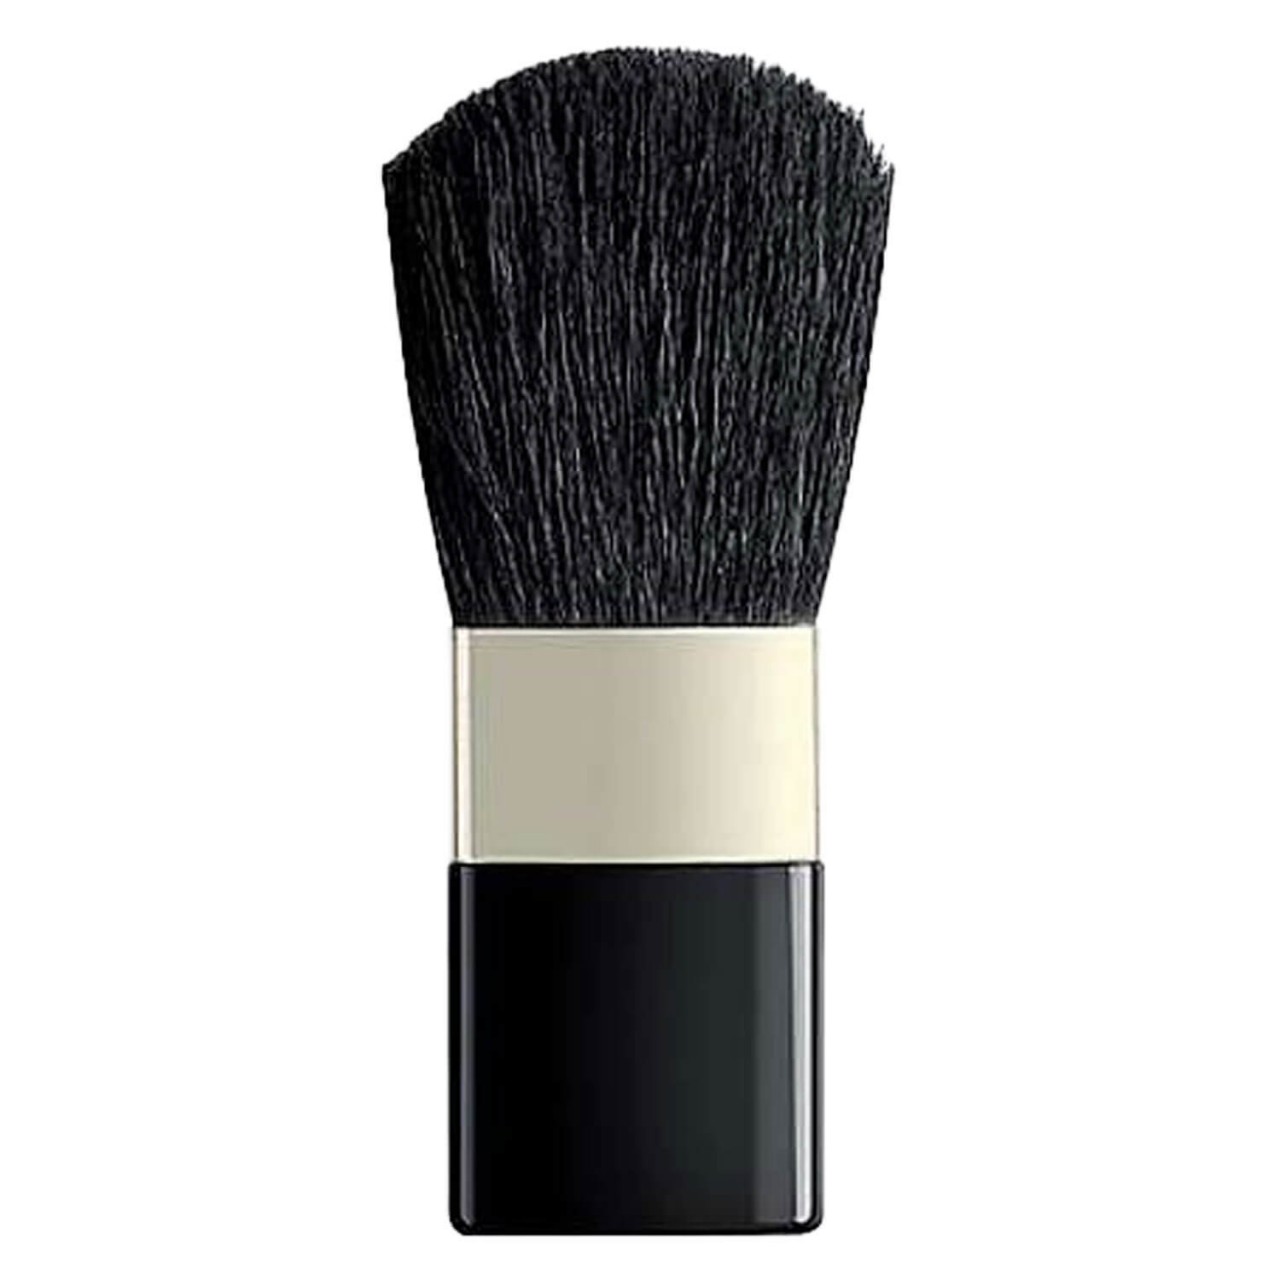 Artdeco Tools - Blusher Brush for Beauty Box von Artdeco